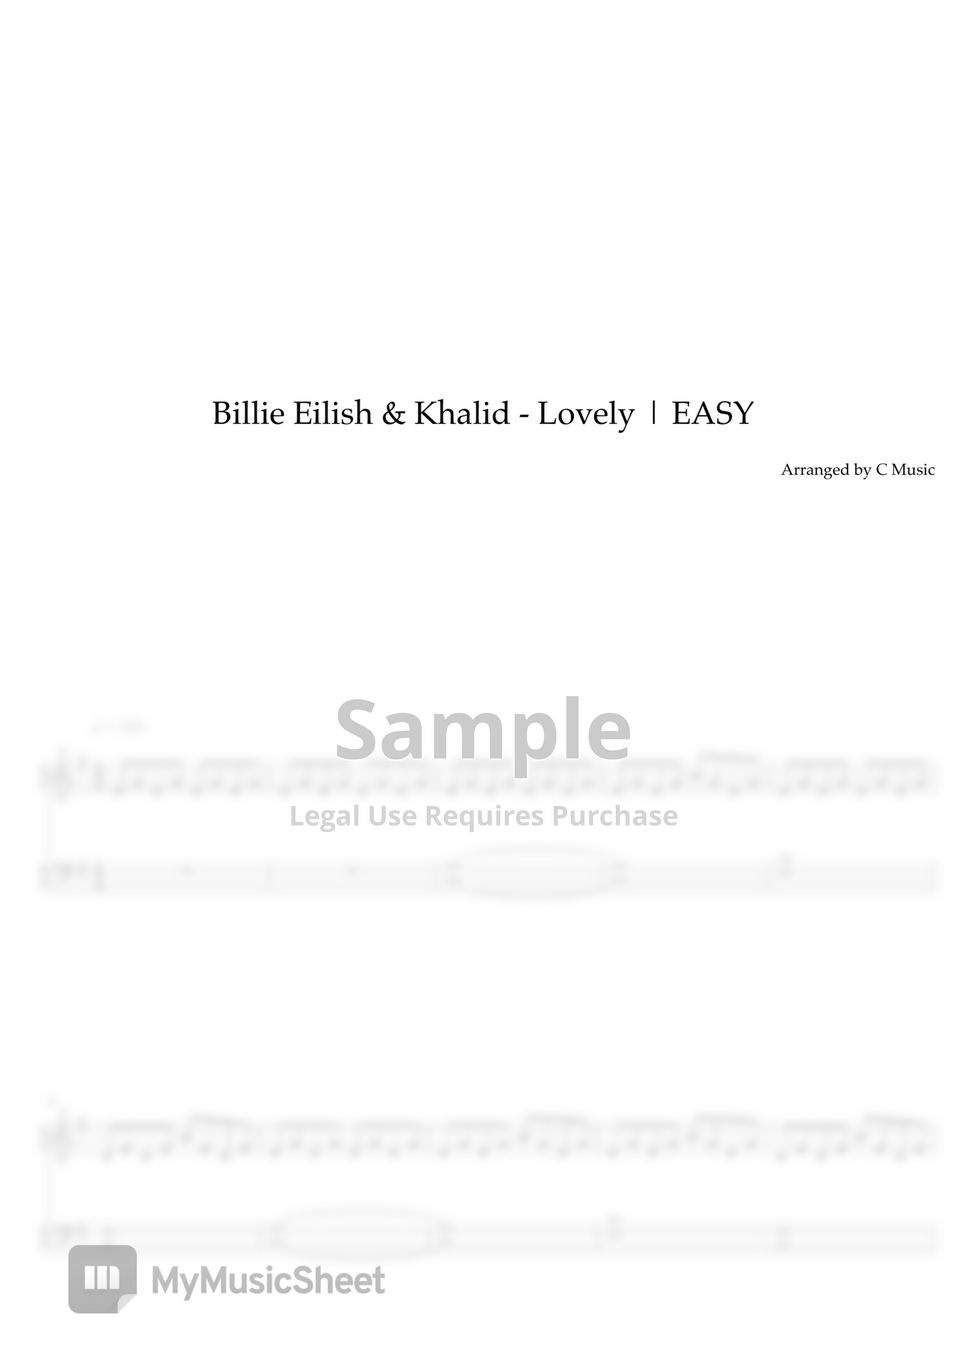 Billie Eilish & Khalid - Lovely (Easy Version) by C Music